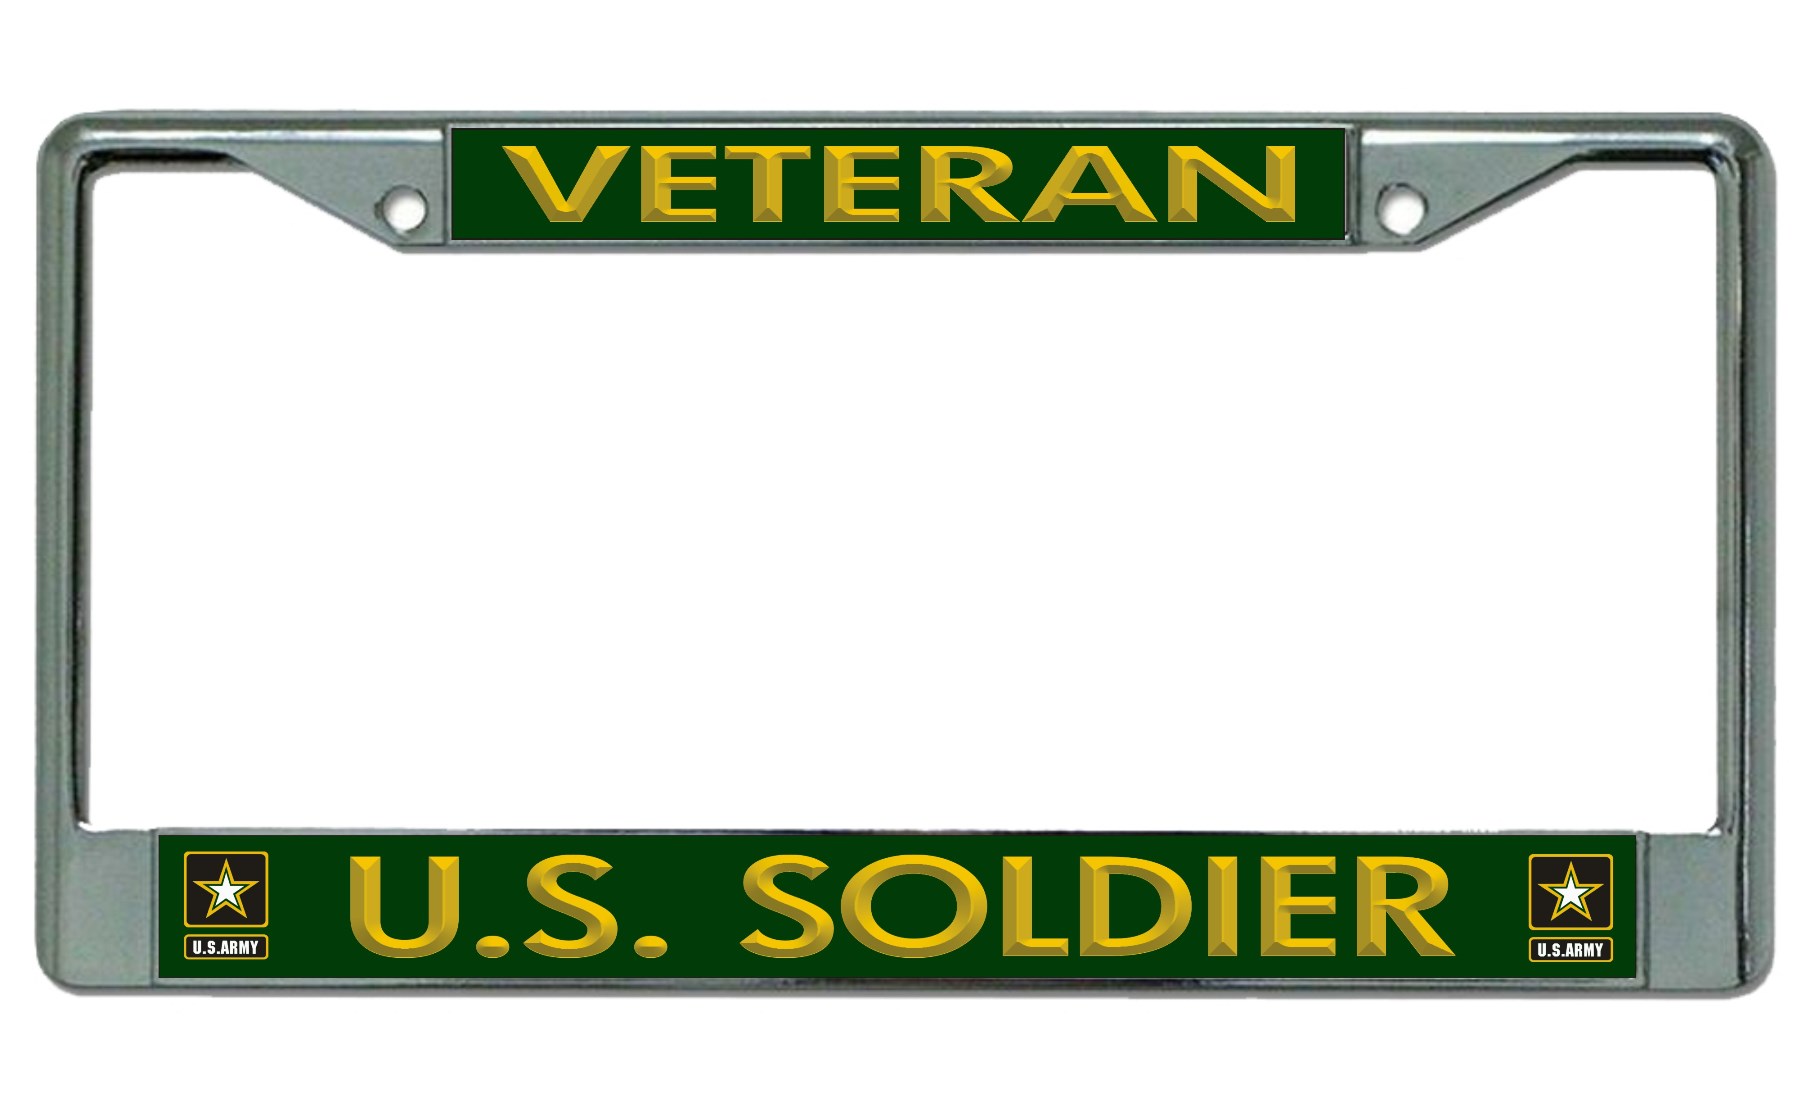 License Plates Online Army U.S. Soldier Veteran Chrome License Plate Frame